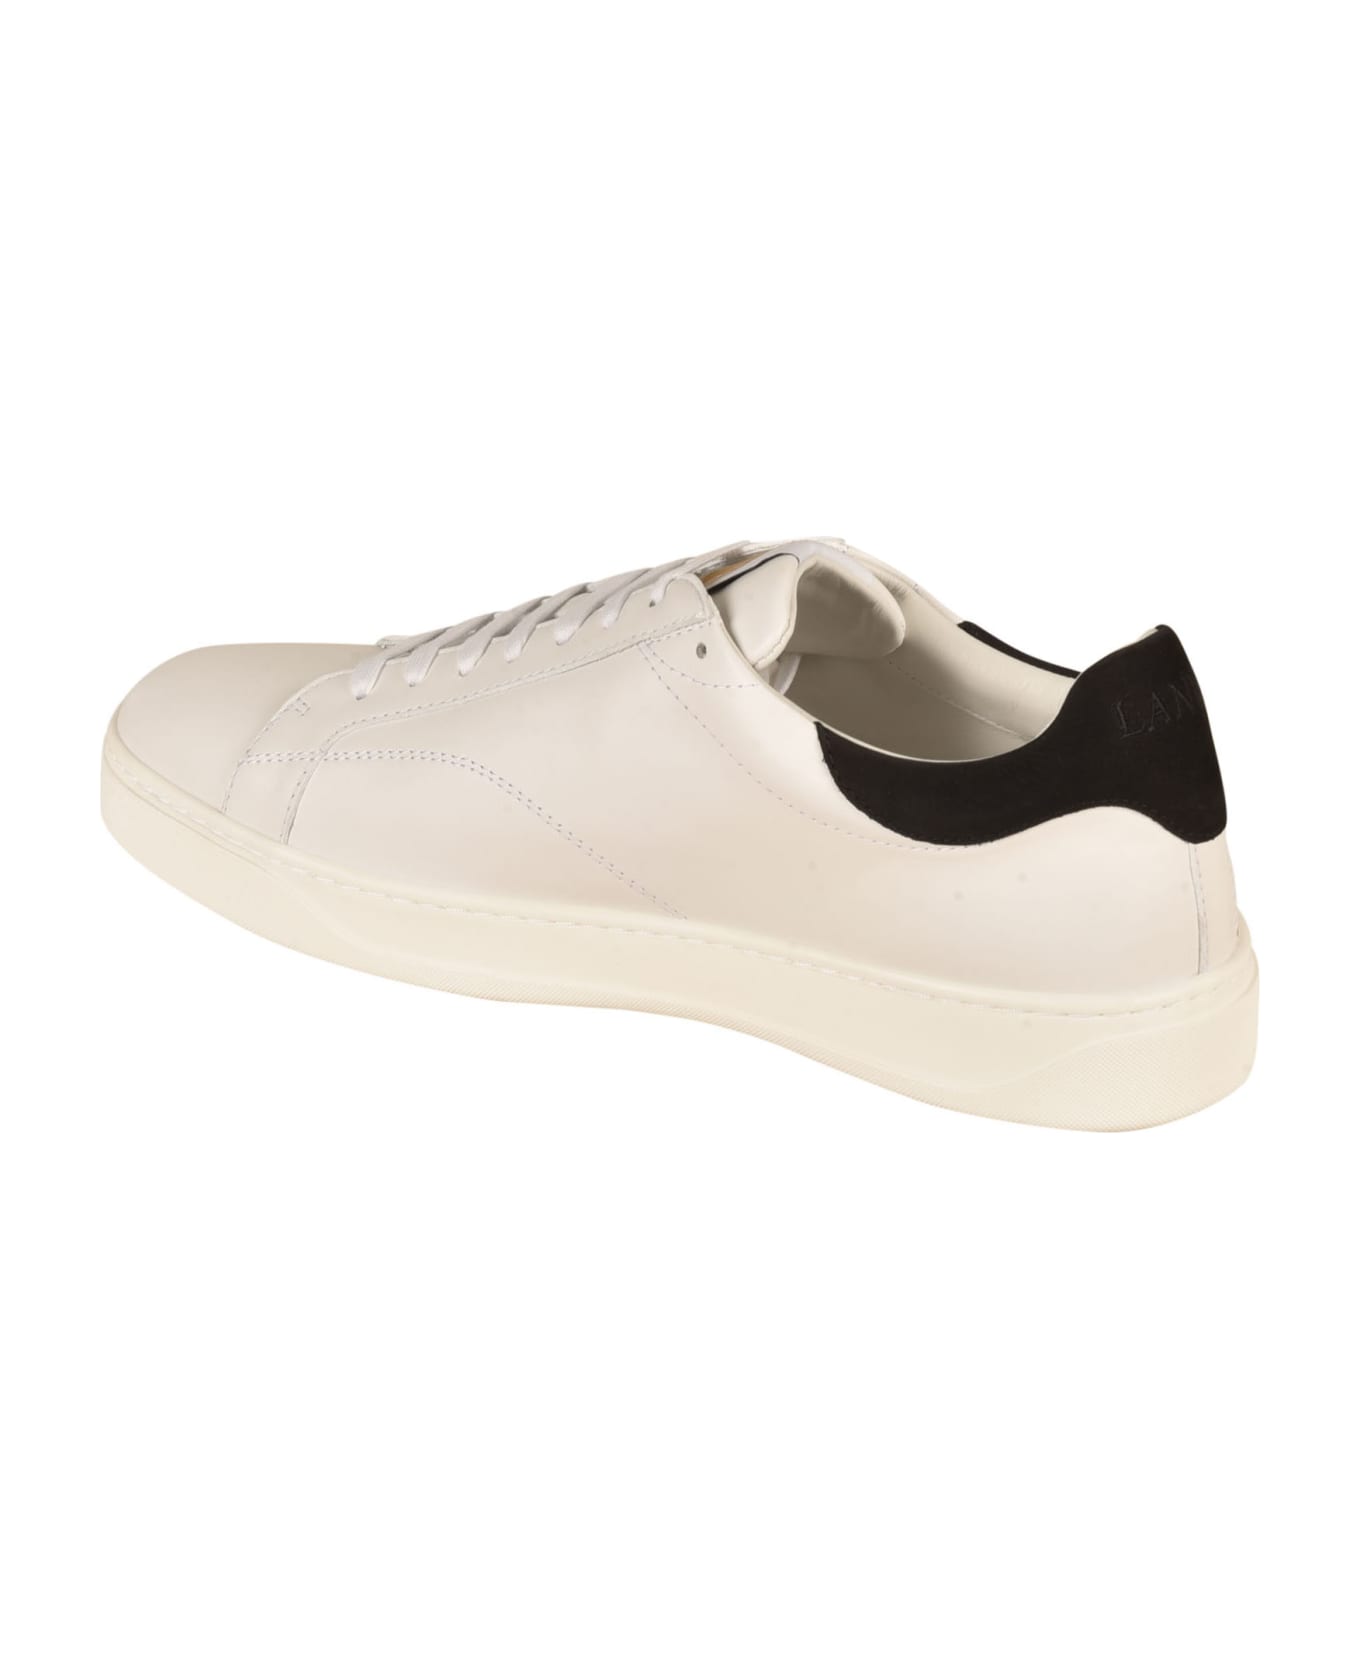 Lanvin Classic Sneakers - White/Black スニーカー